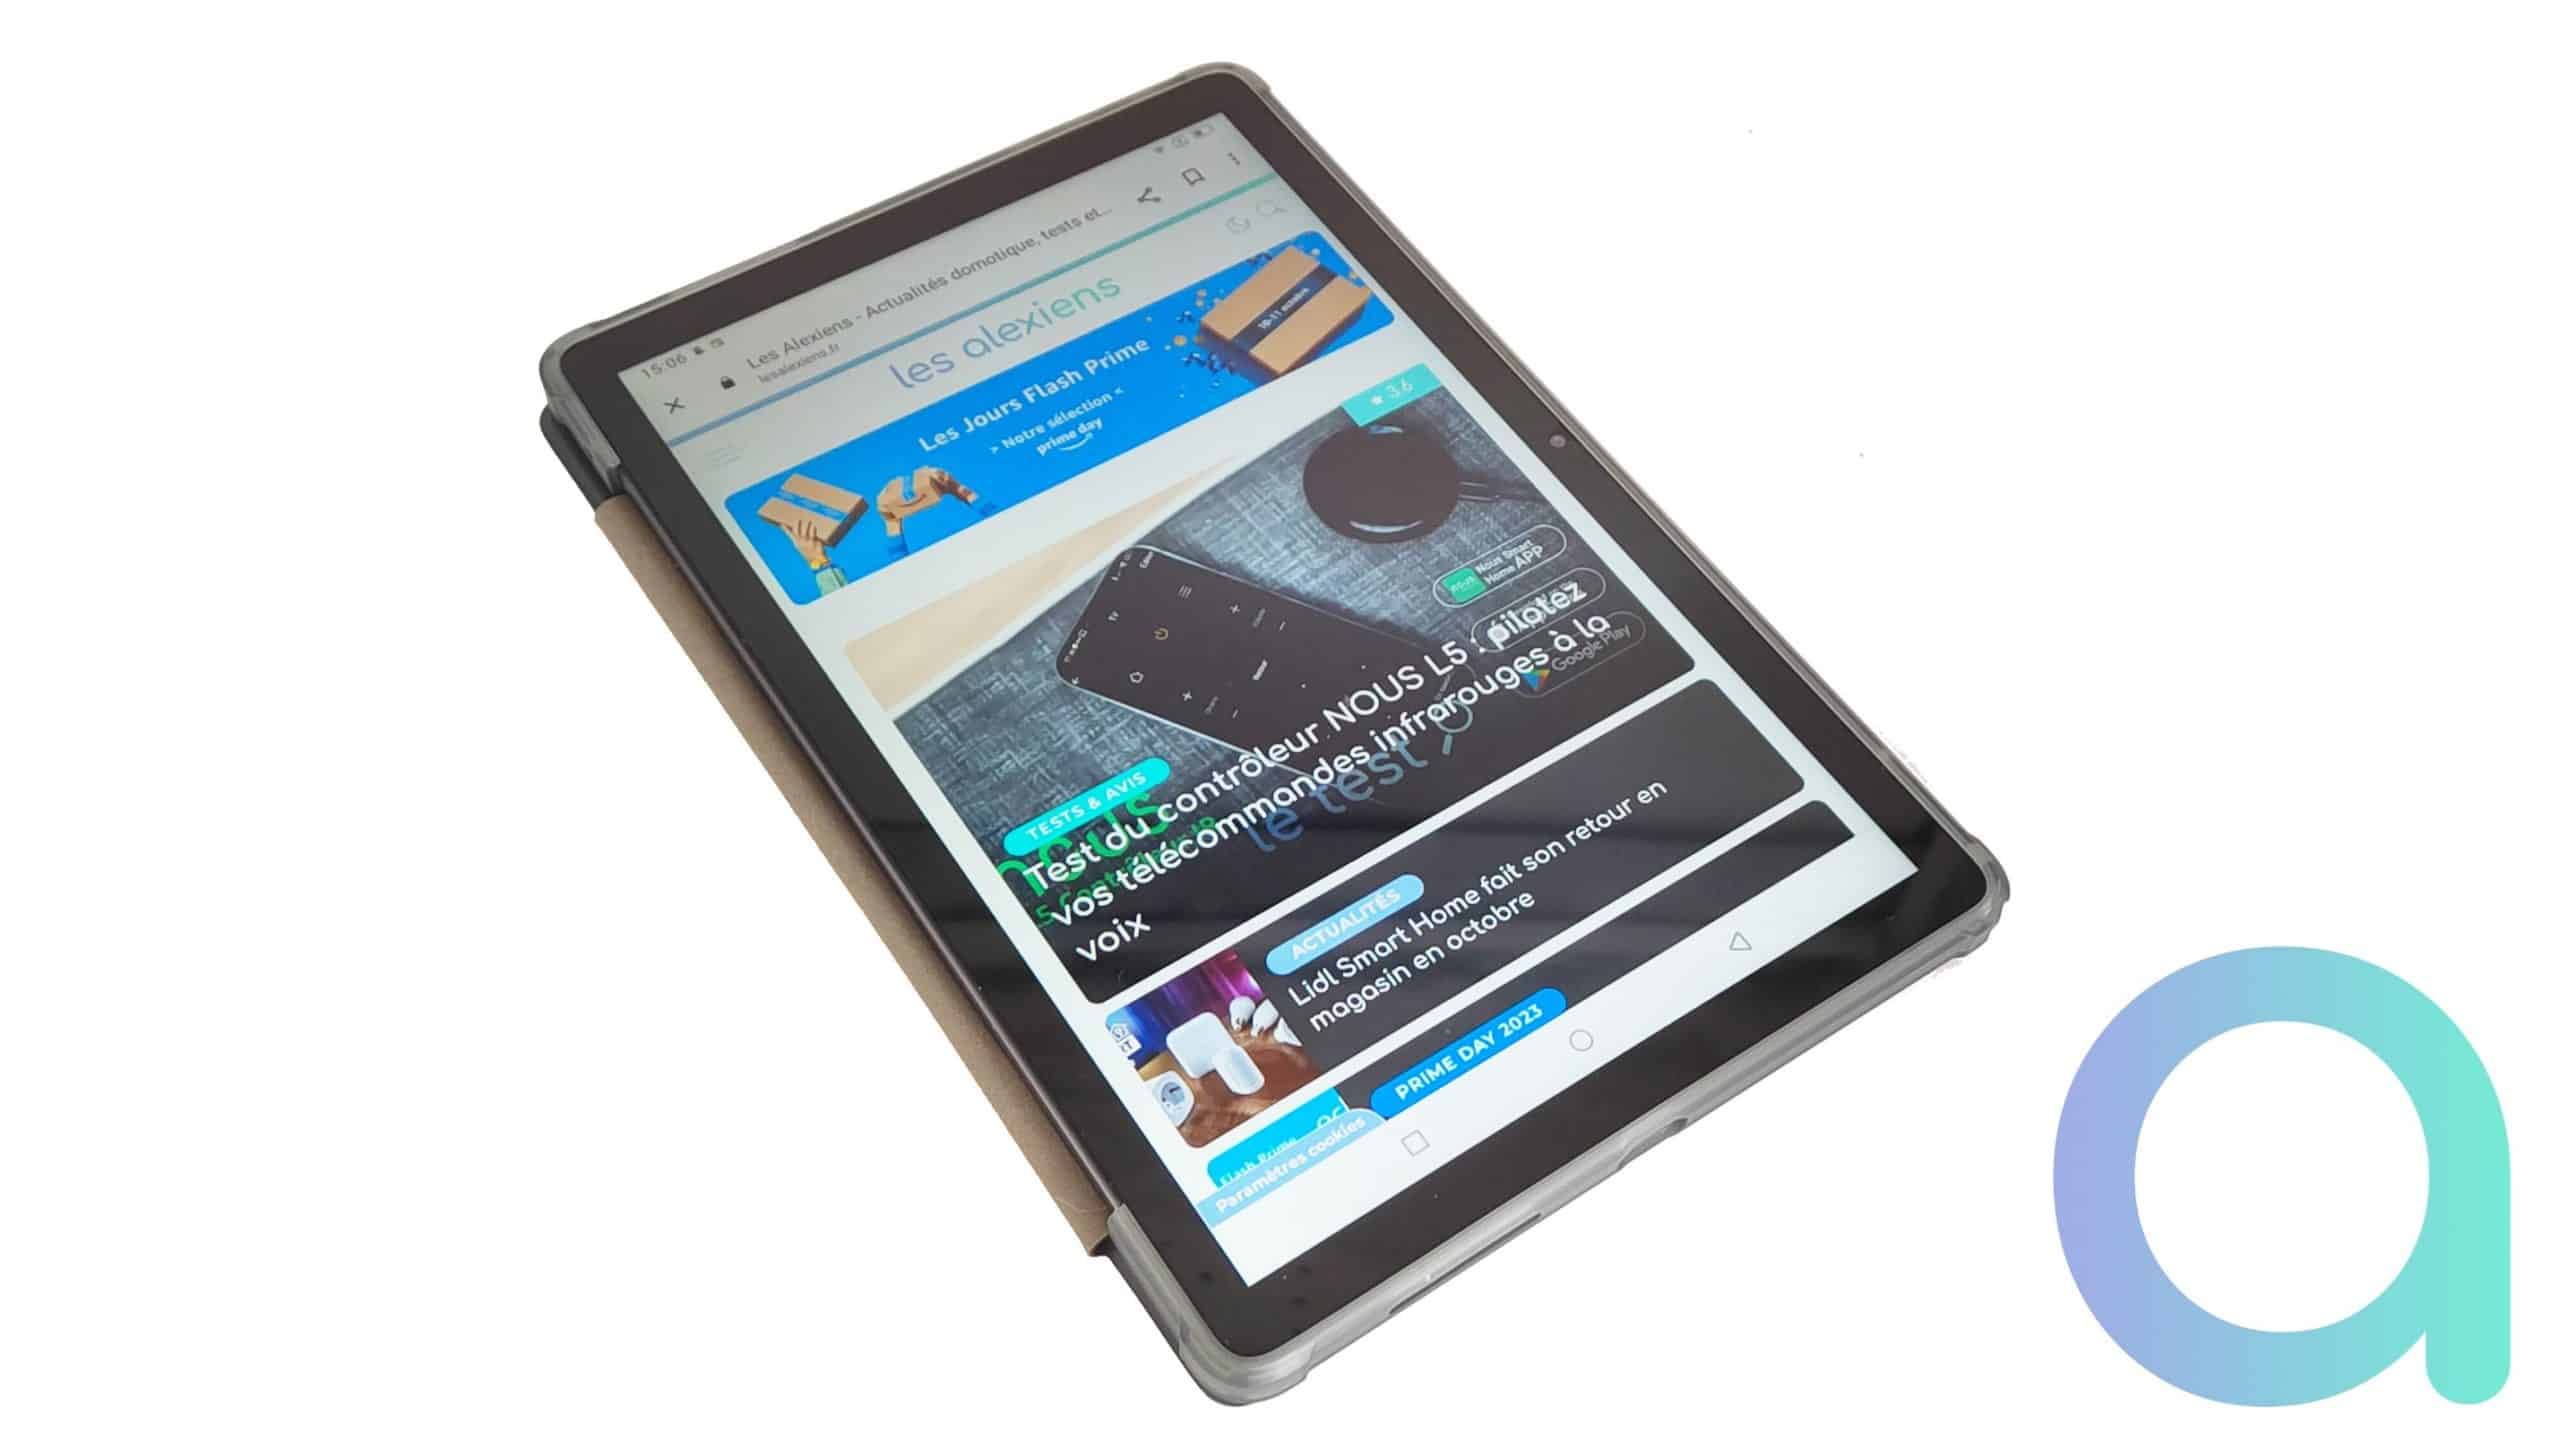 Tablette tactile Blackview Tab 50 WiFi Tablette Tactile 8 pouces HD  8Go+128Go/SD 1To 5580mAh WiFi 6 Tablette PC Android 13 Gris Avec Clavier K1